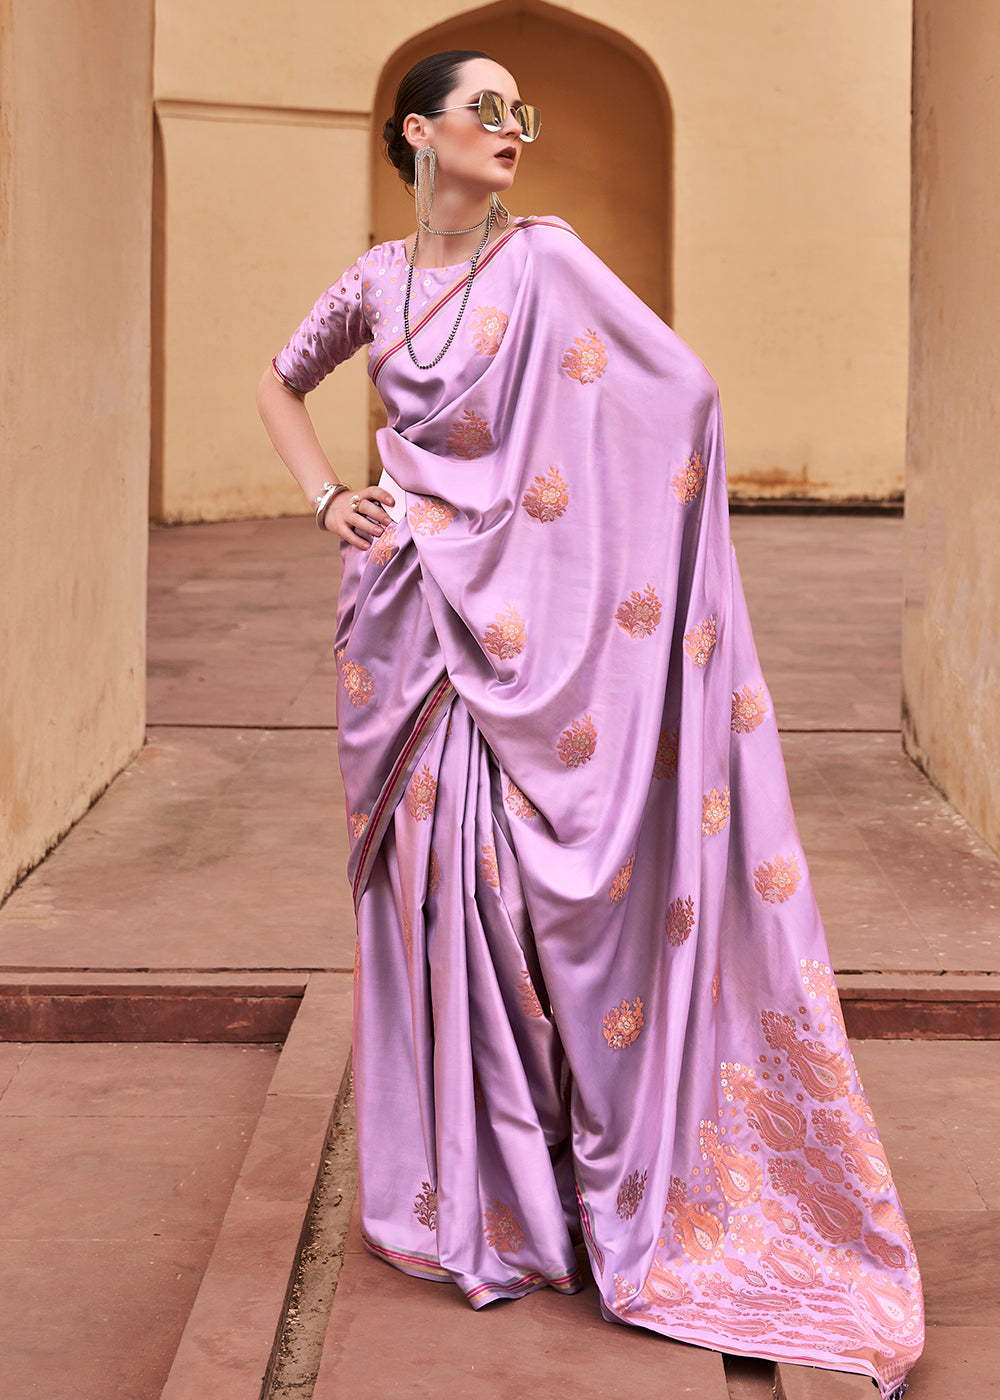 Kalki koechlin handloom traditional wear banarasi designer saree with blouse